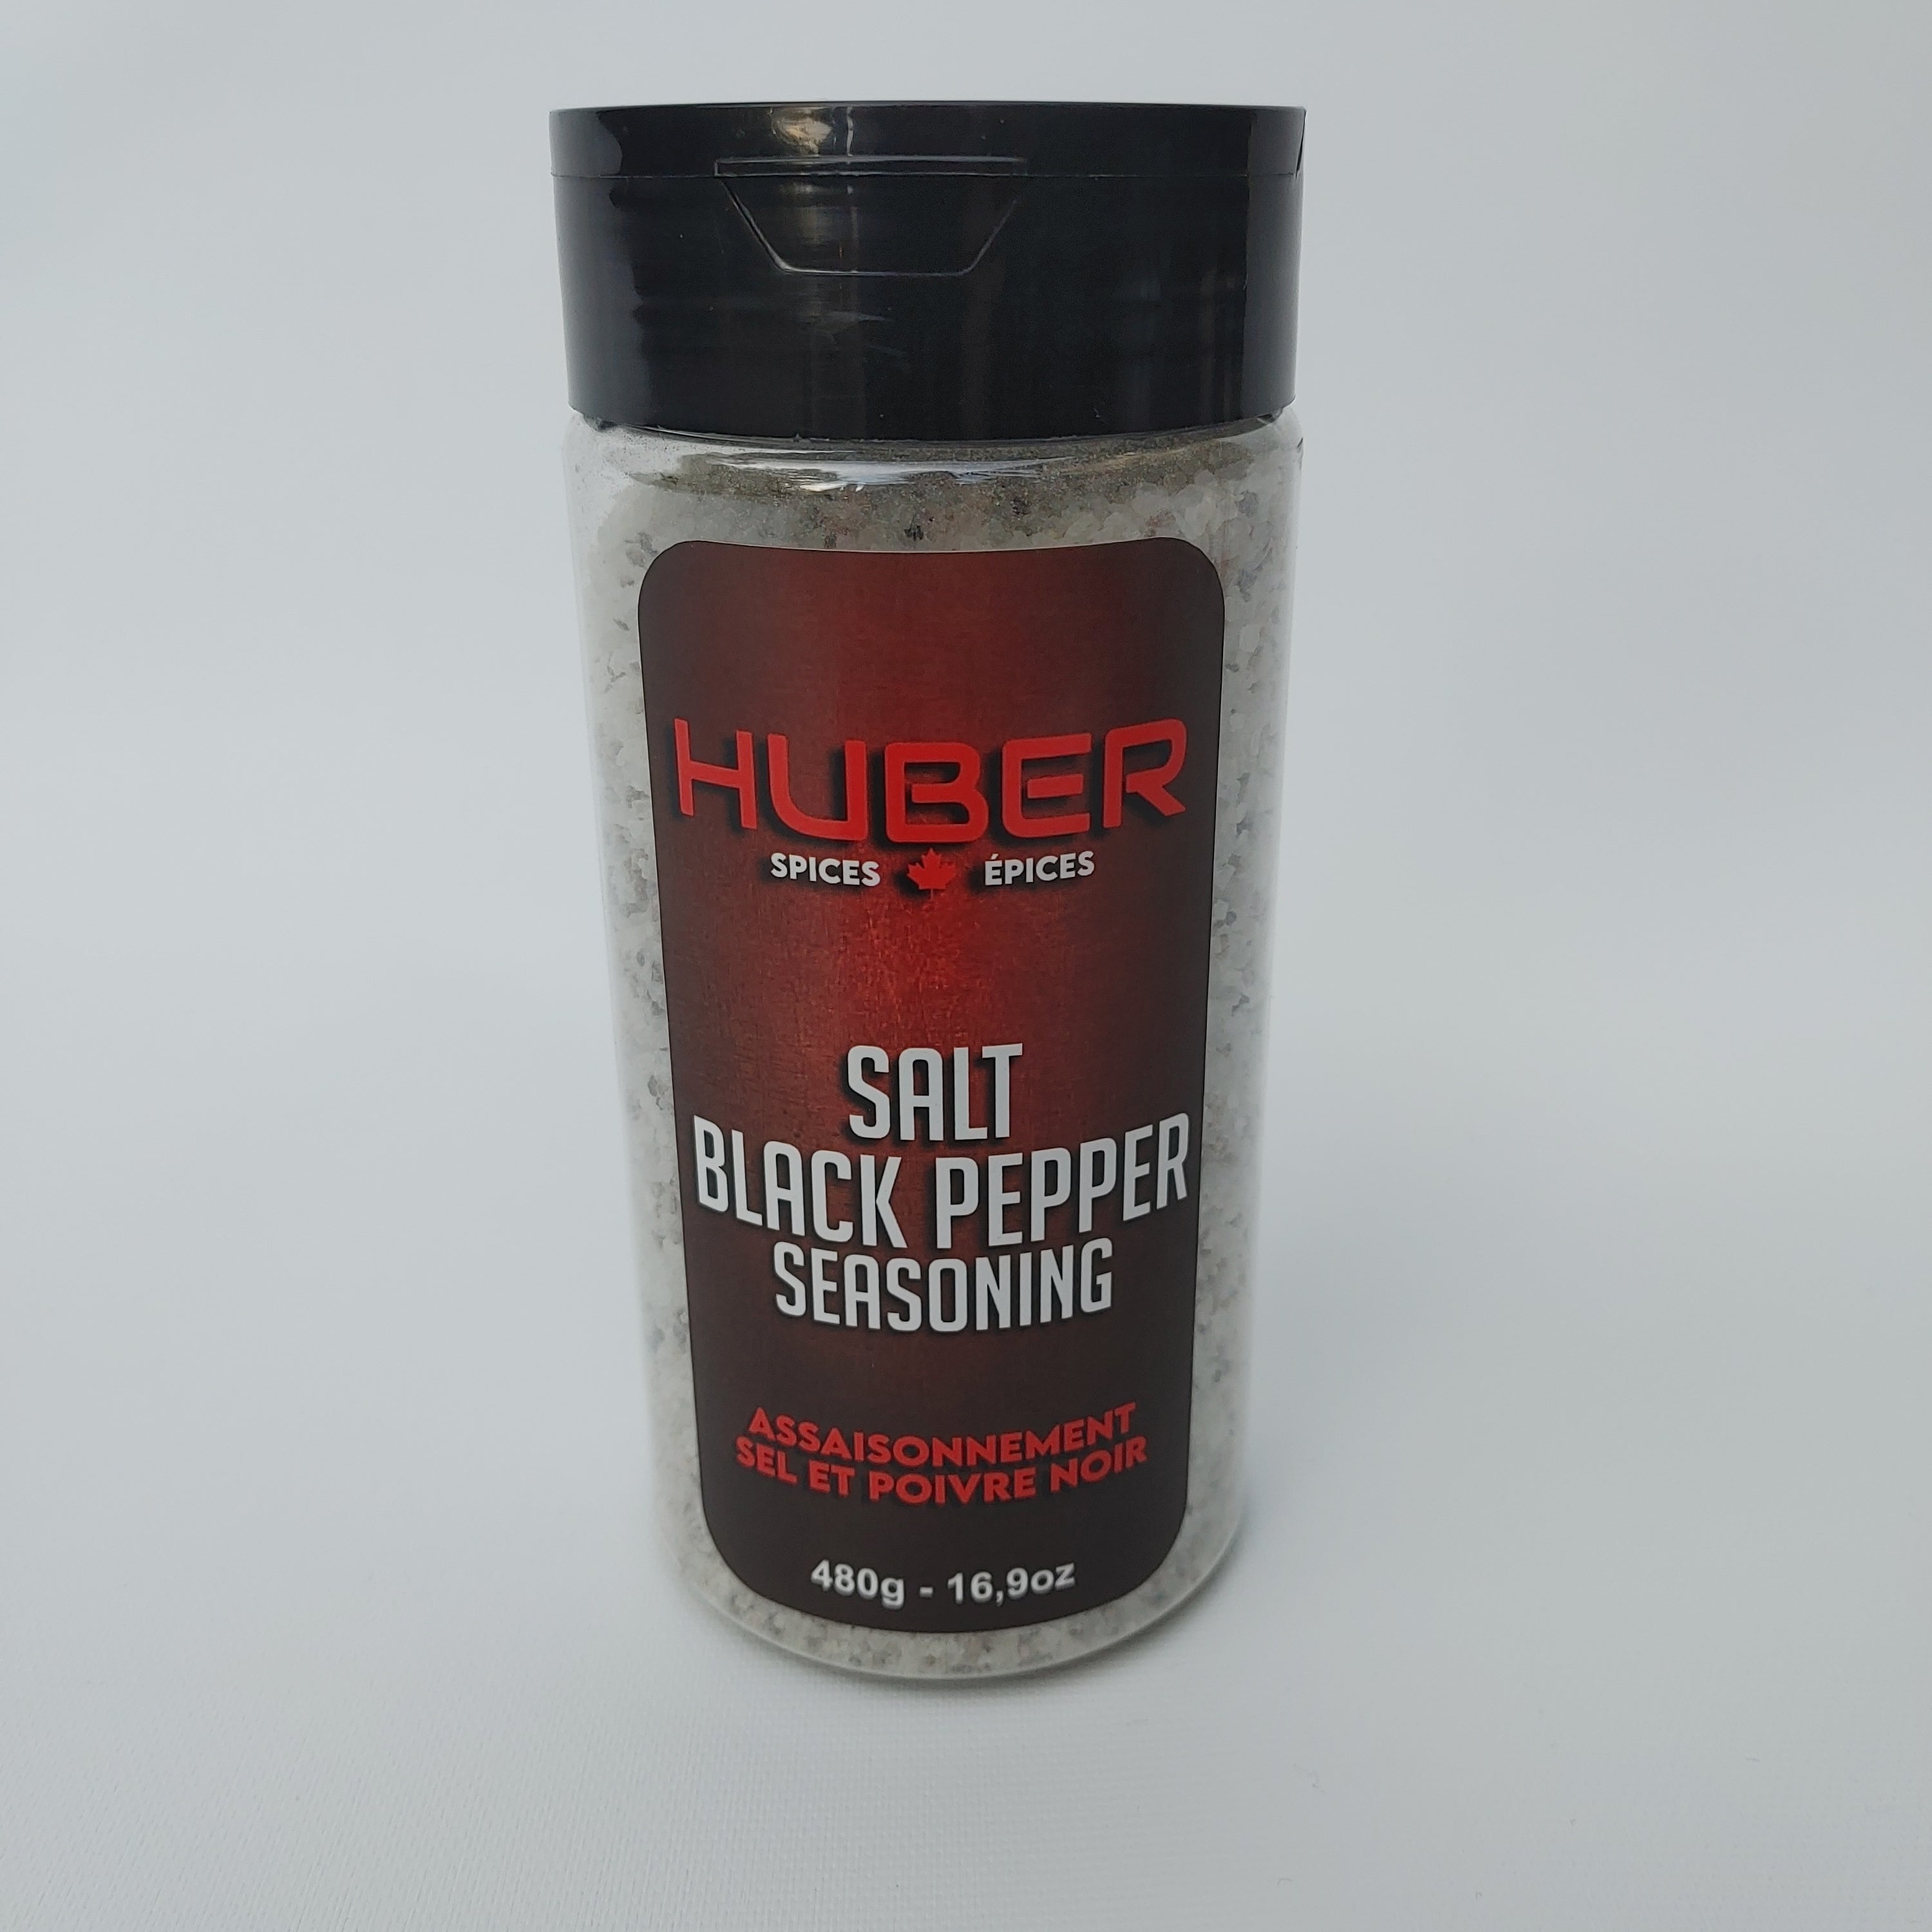 HUBER - Salt Black Pepper Seasoning - FINAL SALE - EXPIRED or CLOSE TO EXPIRY